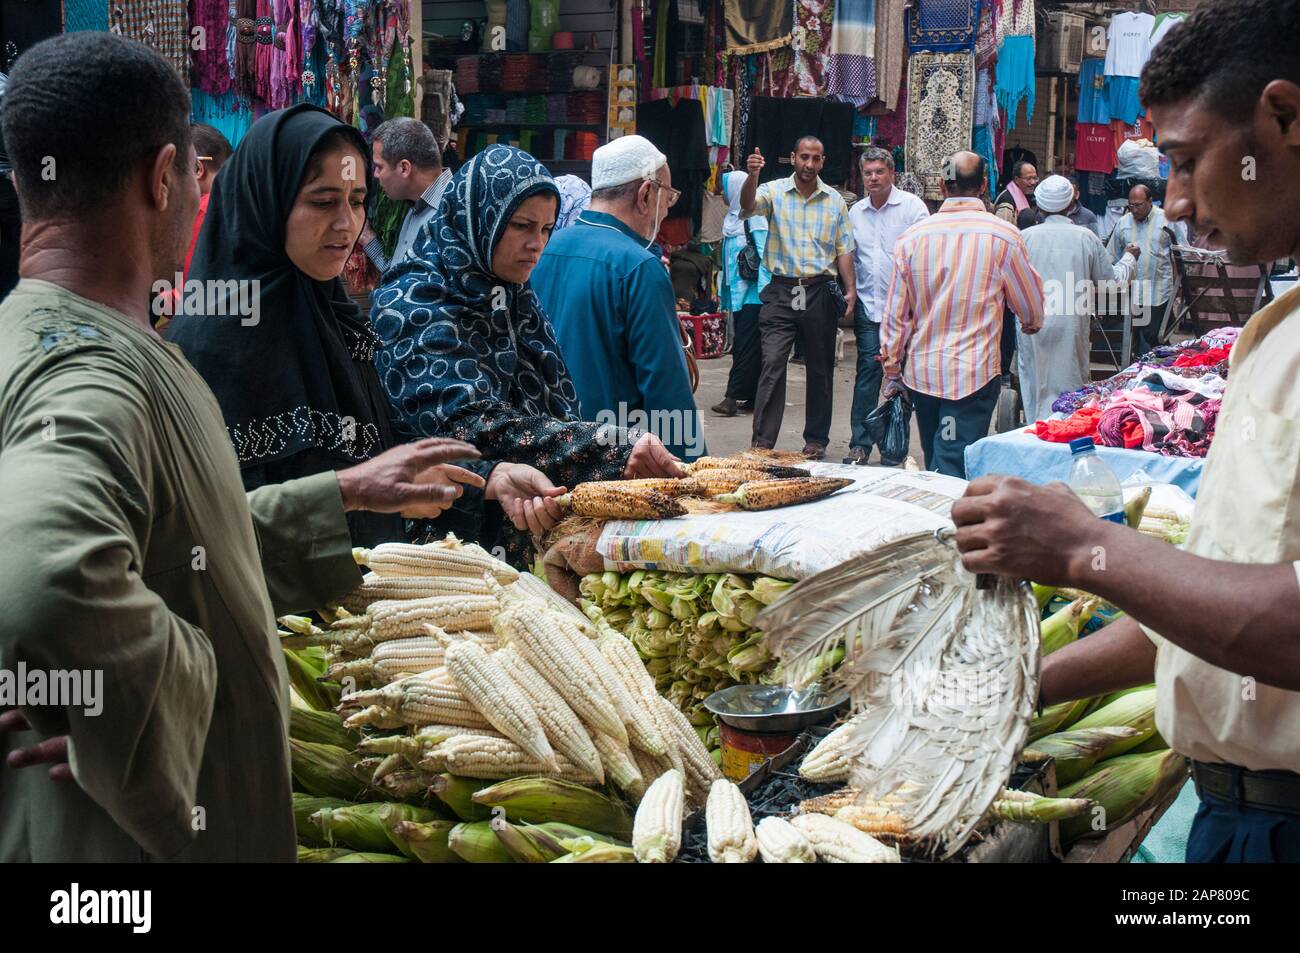 A women scrutinises ears of corn at a street market along Muski in the Khan el-Khalili quarter of Cairo, Egypt Stock Photo